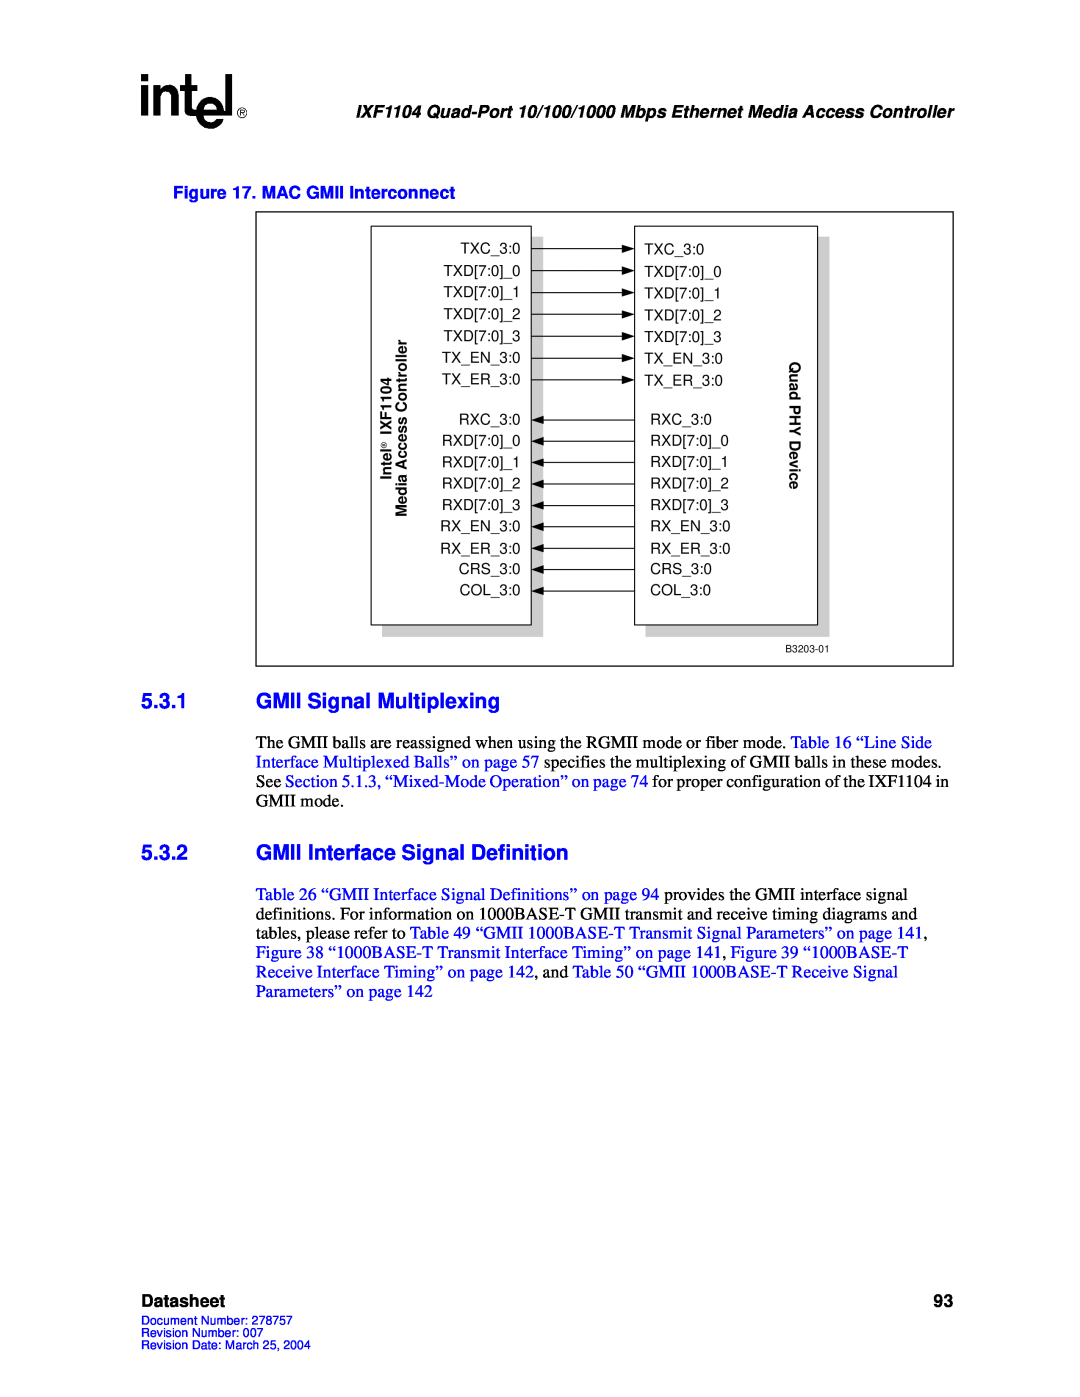 Intel IXF1104 manual 5.3.1GMII Signal Multiplexing, 5.3.2GMII Interface Signal Definition, Datasheet 